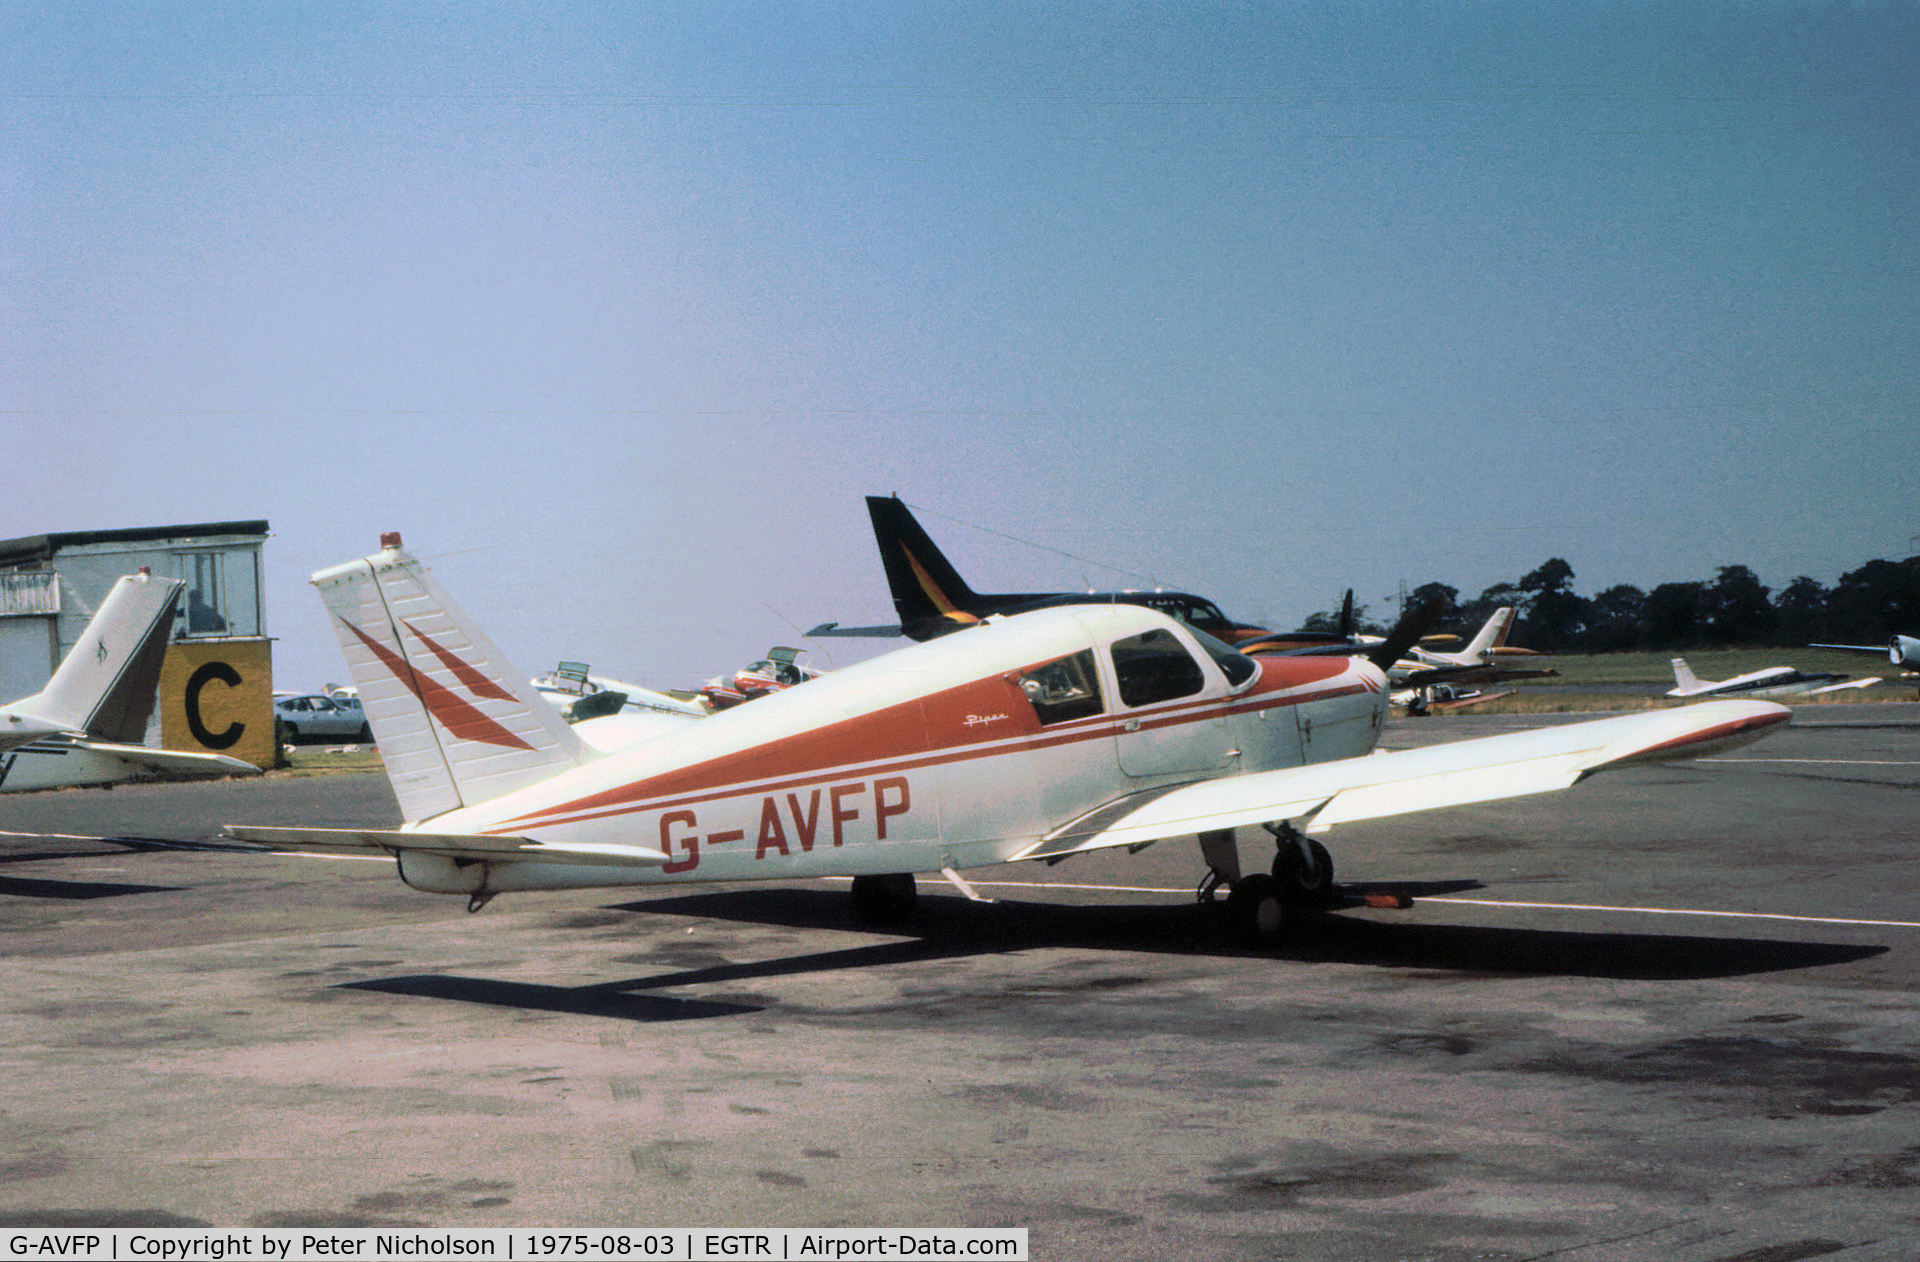 G-AVFP, 1967 Piper PA-28-140 Cherokee C/N 28-22652, PA-28-140 Cherokee as seen at Elstree in the Summer of 1975.